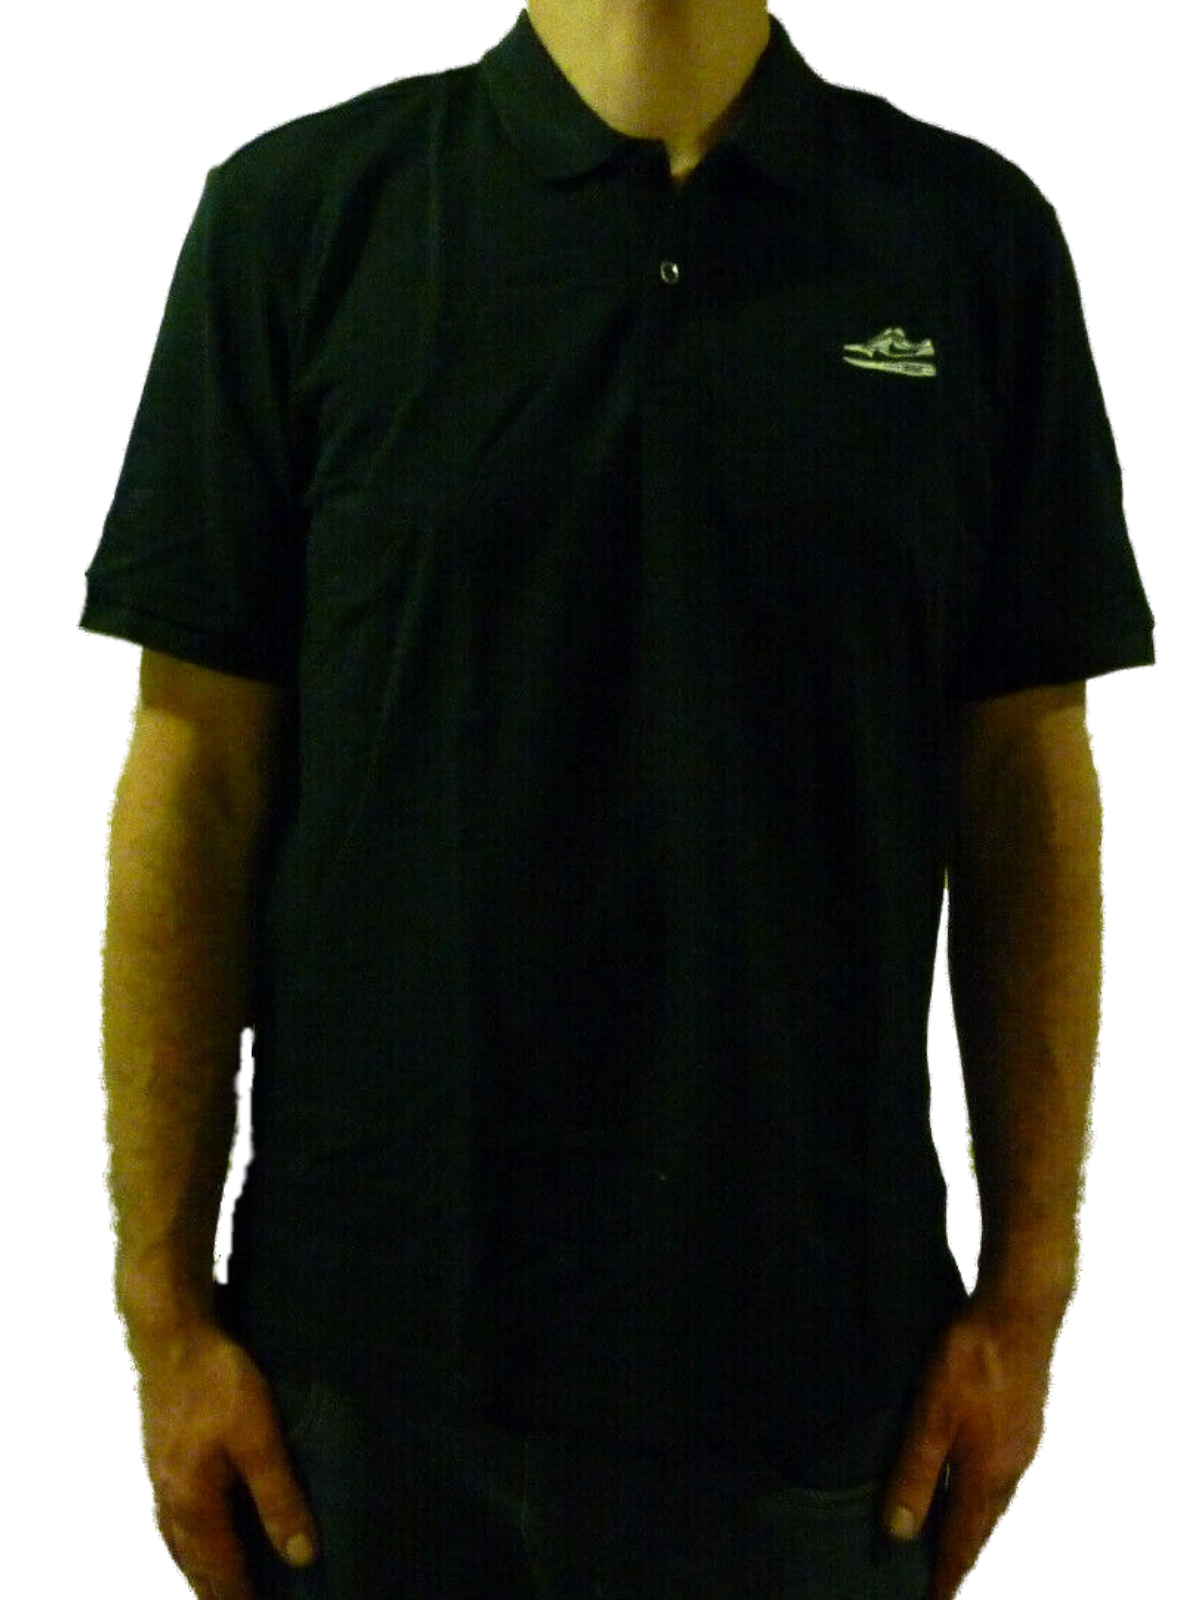 10 Nike Mens Polo Shirt Classic Cotton Short Sleeve Collared T Shirt Tee Top S M L XL 2XL New